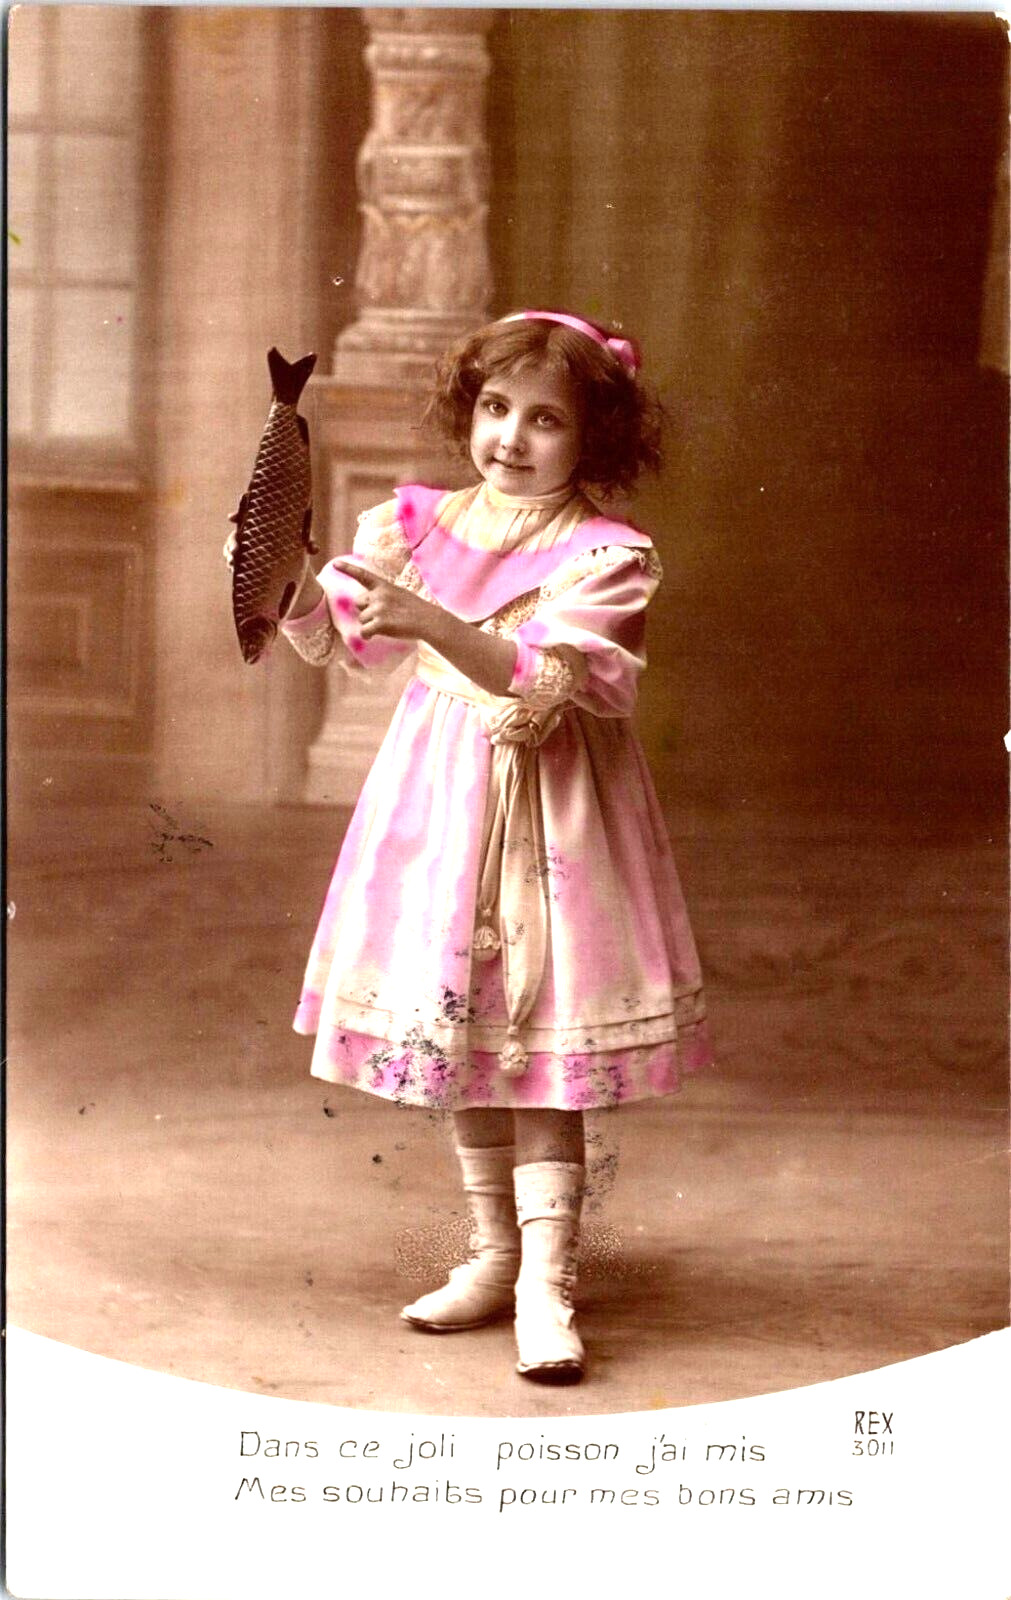 Postcard April 1st/April Fish Day France, Girl in Pink Dress Holding Fish, Poem